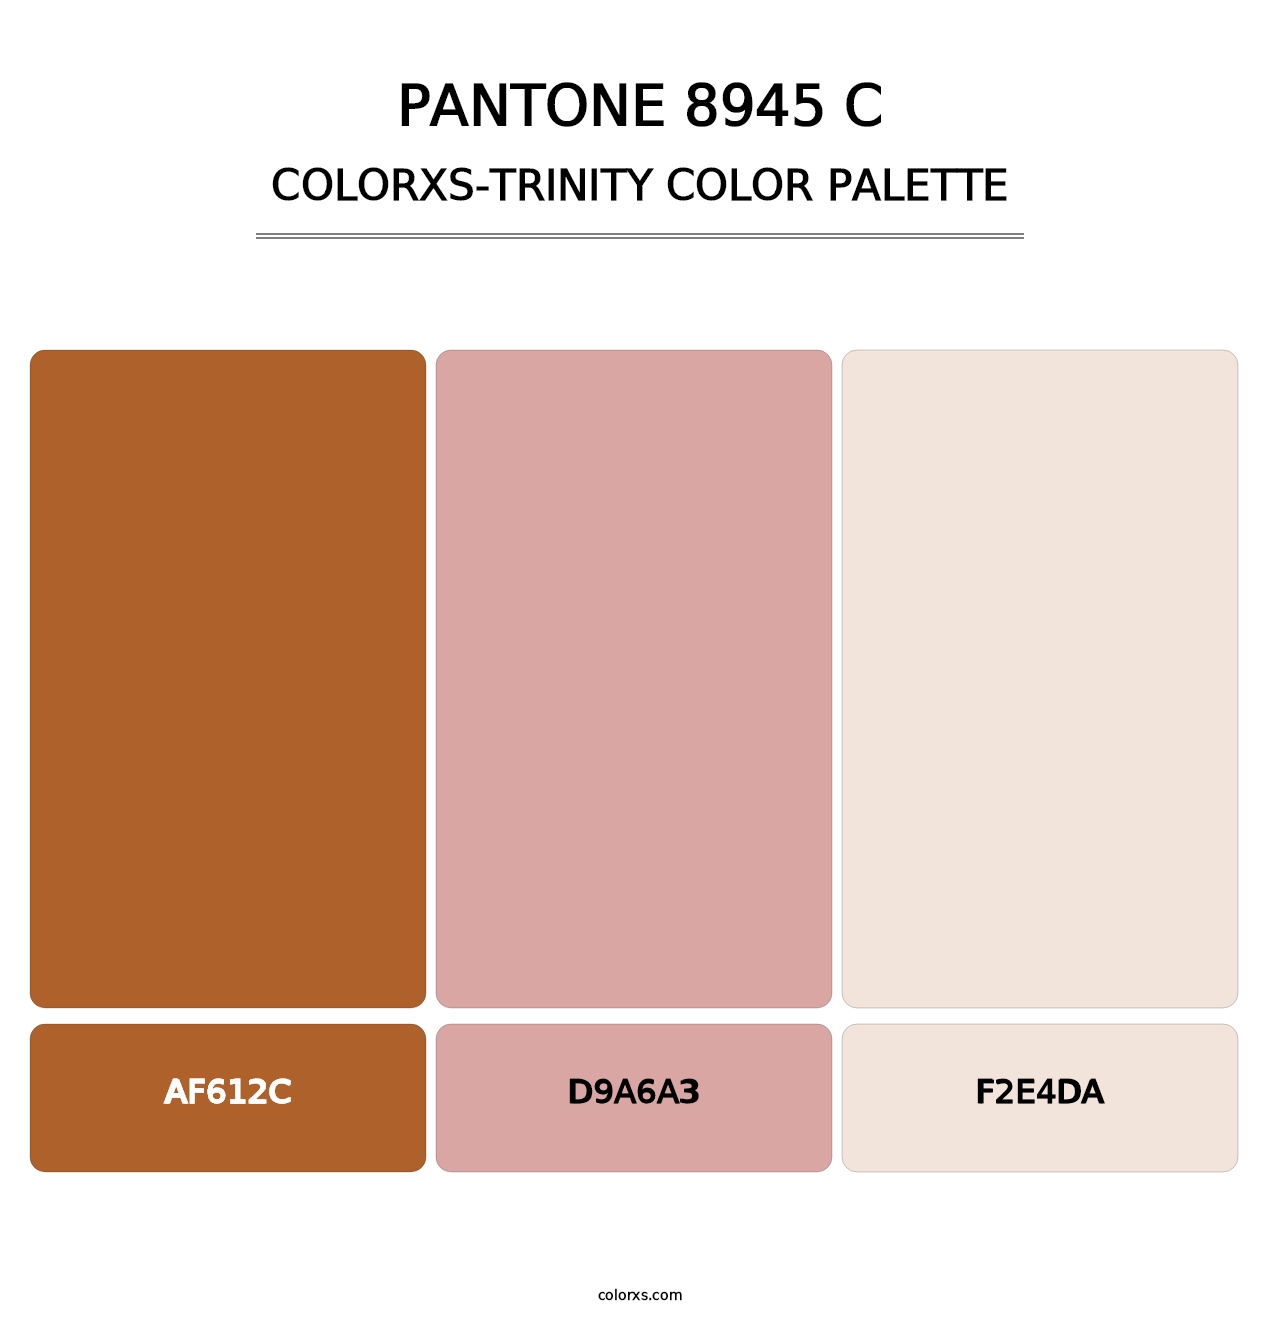 PANTONE 8945 C - Colorxs Trinity Palette